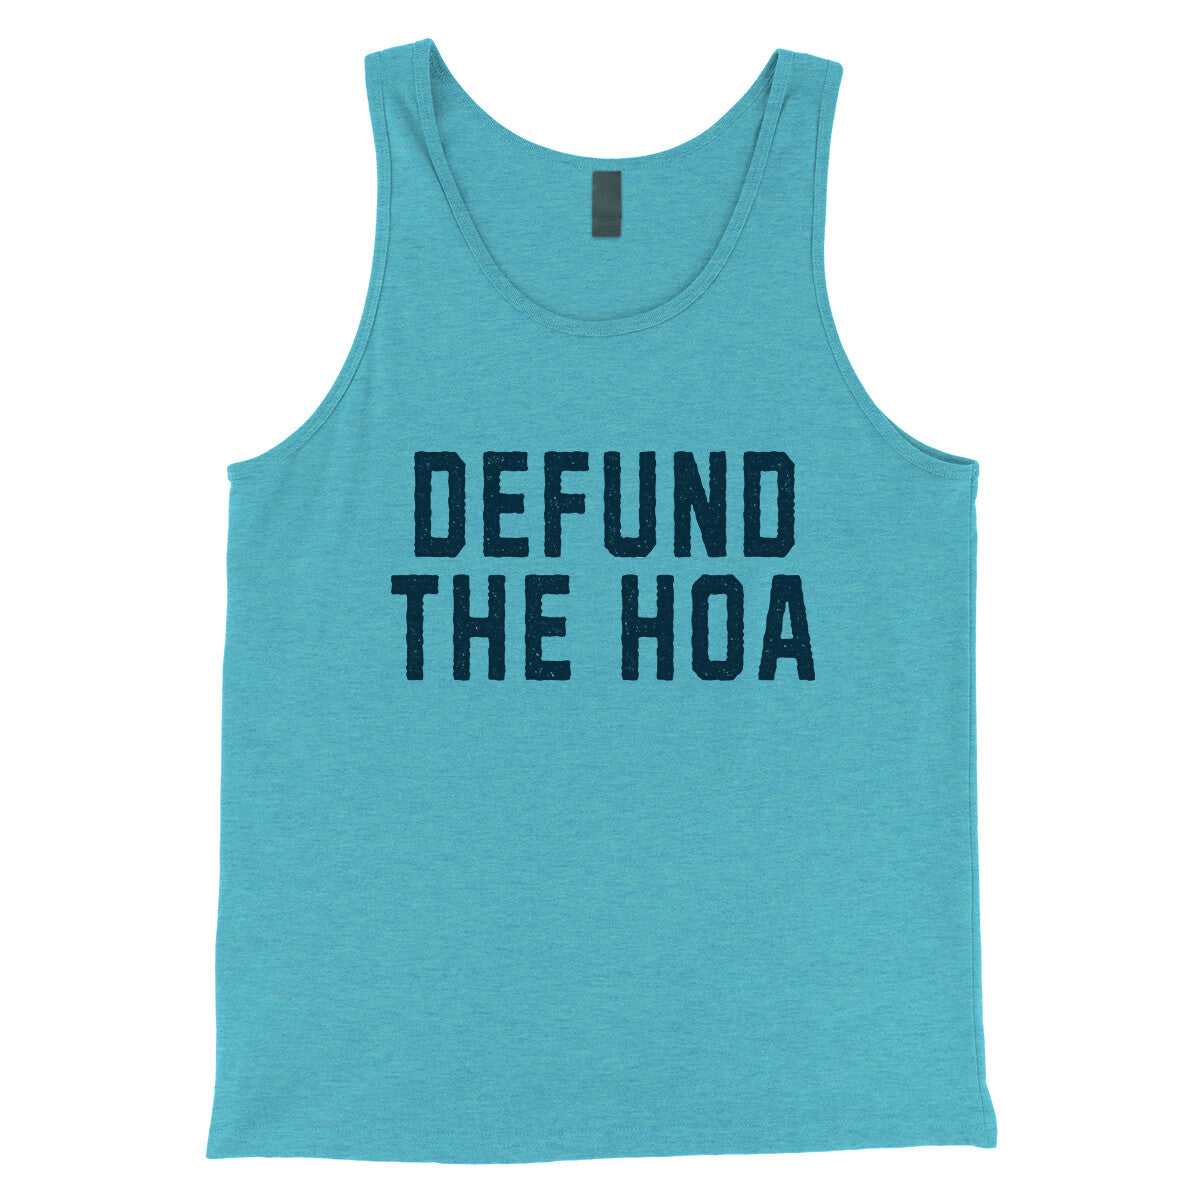 Defund the HOA in Aqua Triblend Color